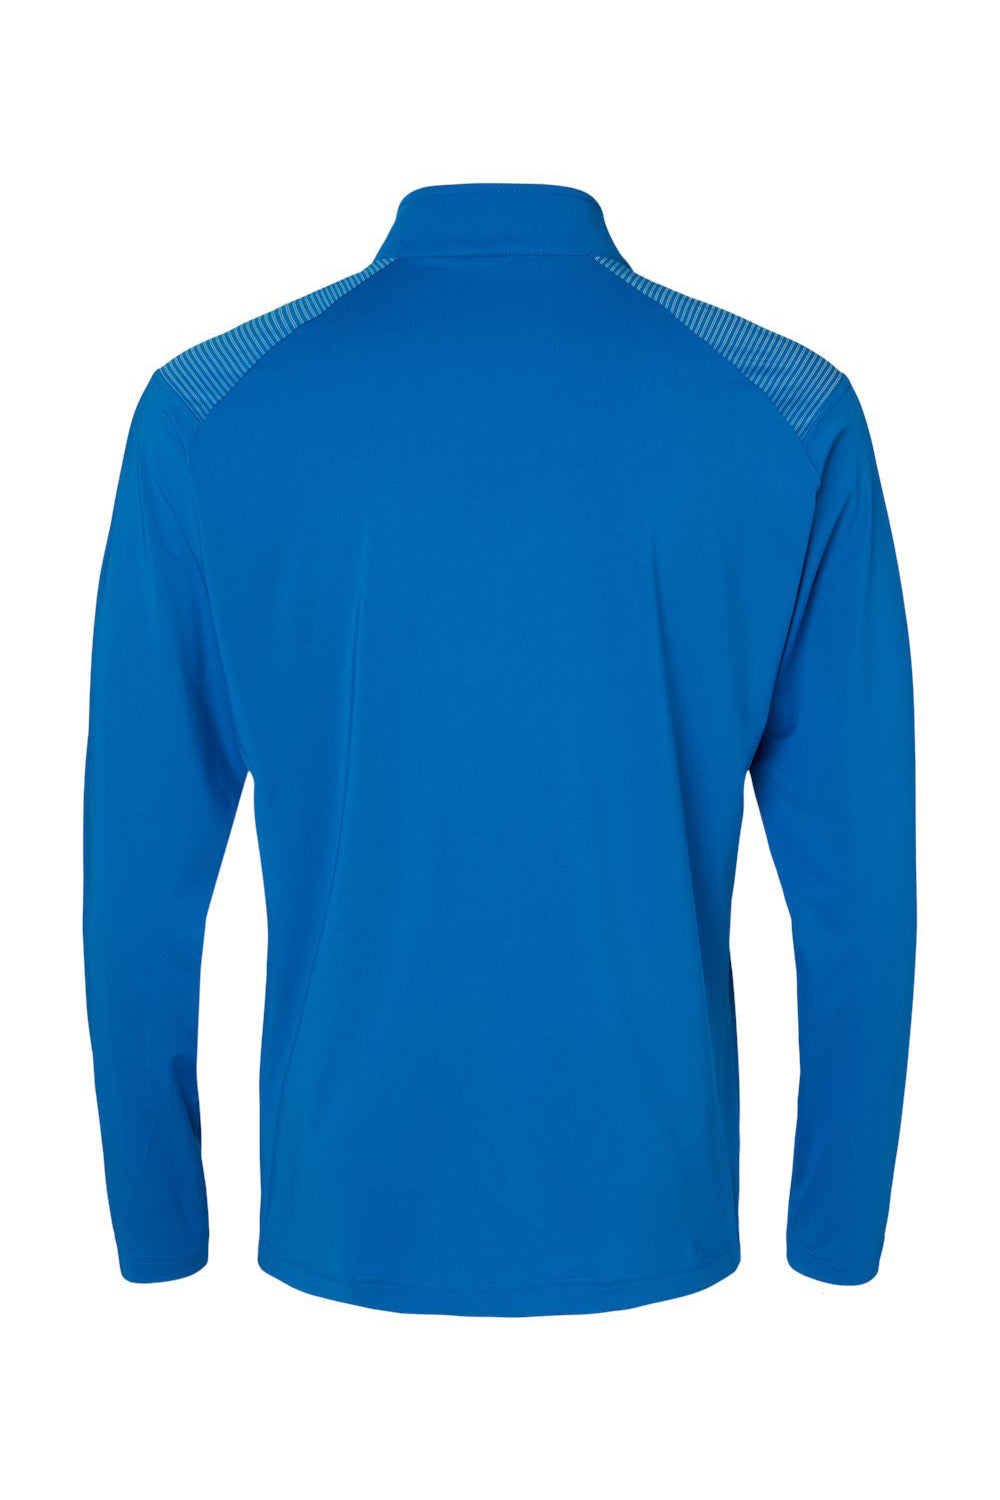 Adidas A520 Mens Shoulder Stripe Moisture Wicking 1/4 Zip Sweatshirt Glory Blue Flat Back